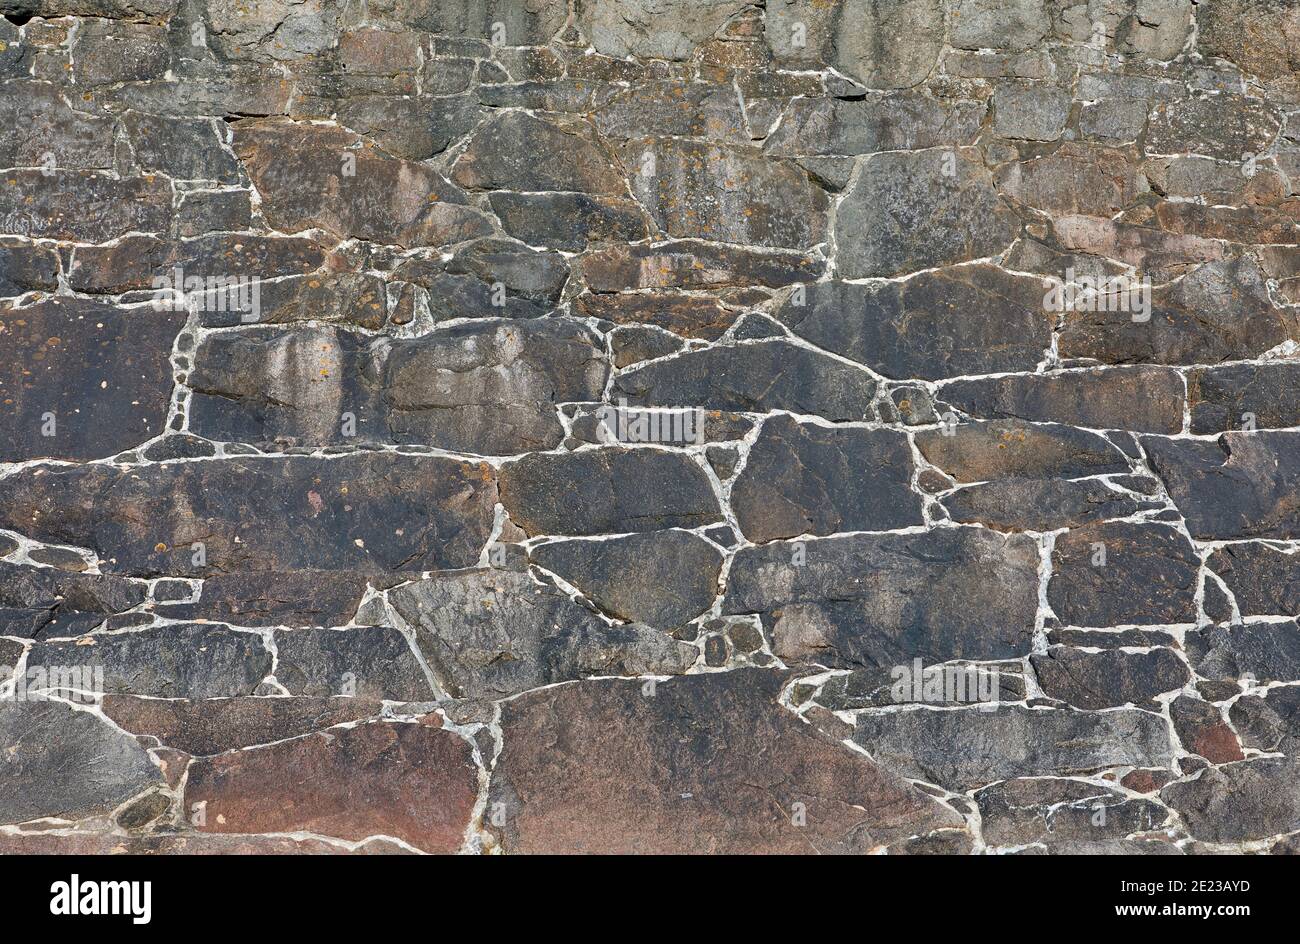 Image of a granite stone coastal wall. Textured background. Stock Photo